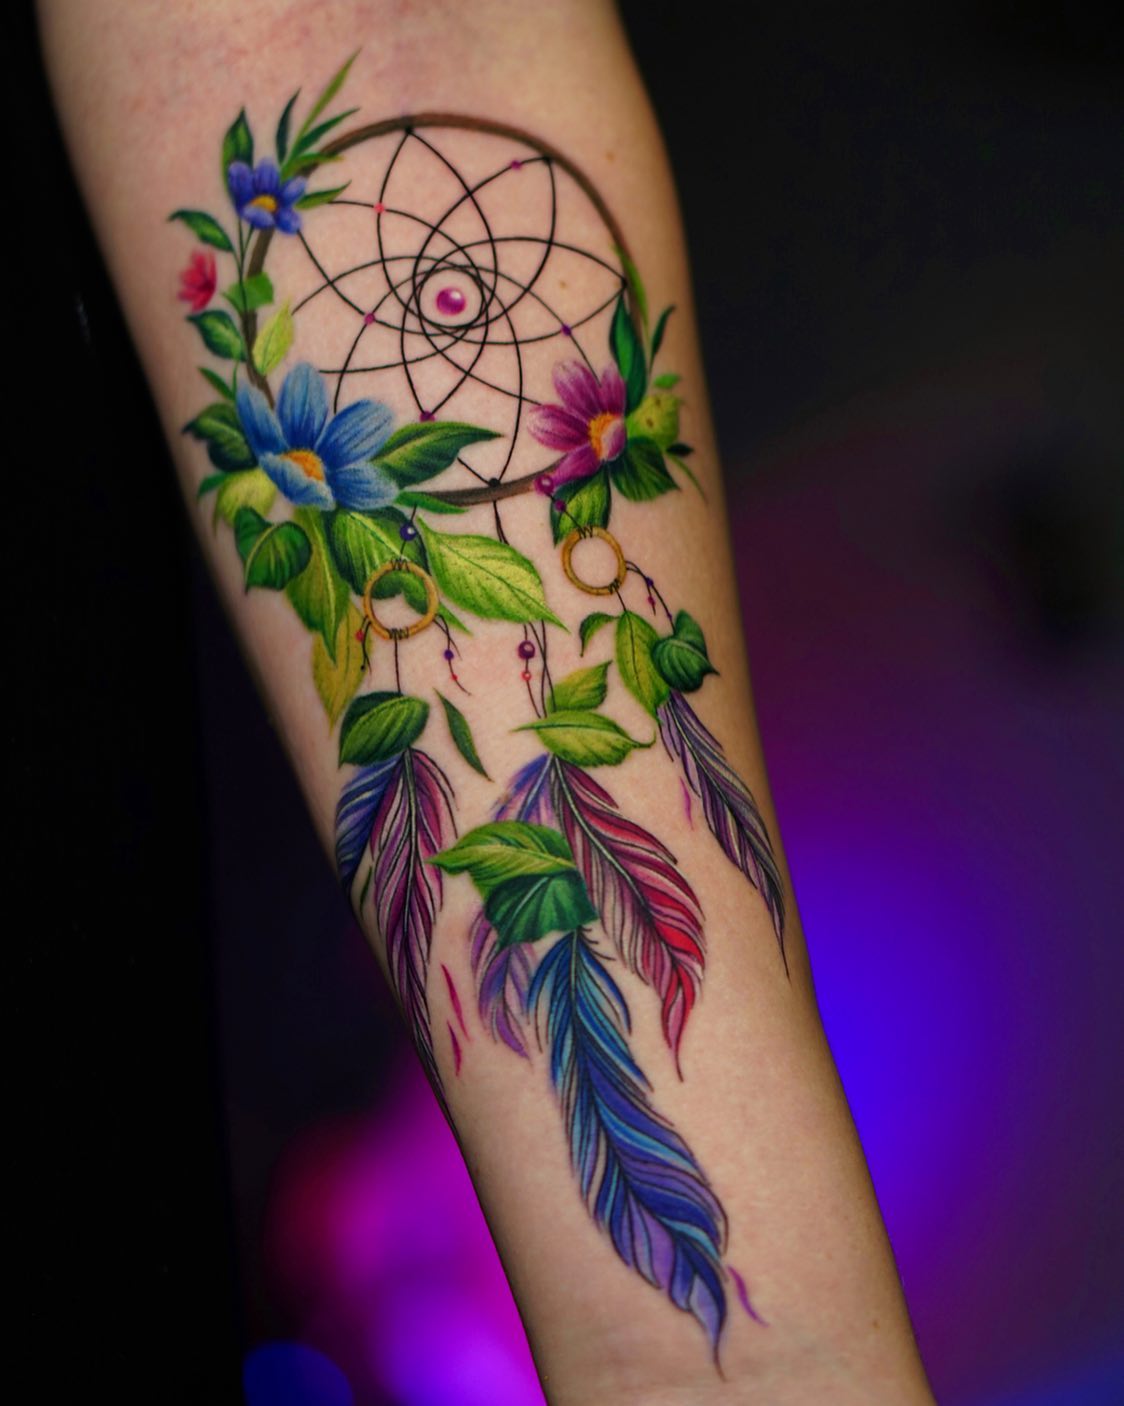 purplepinkbluefeathersflowersdreamcatchertattooformenforearm tattoo  Forearm tattoos Tattoos for guys Dream catcher tattoo